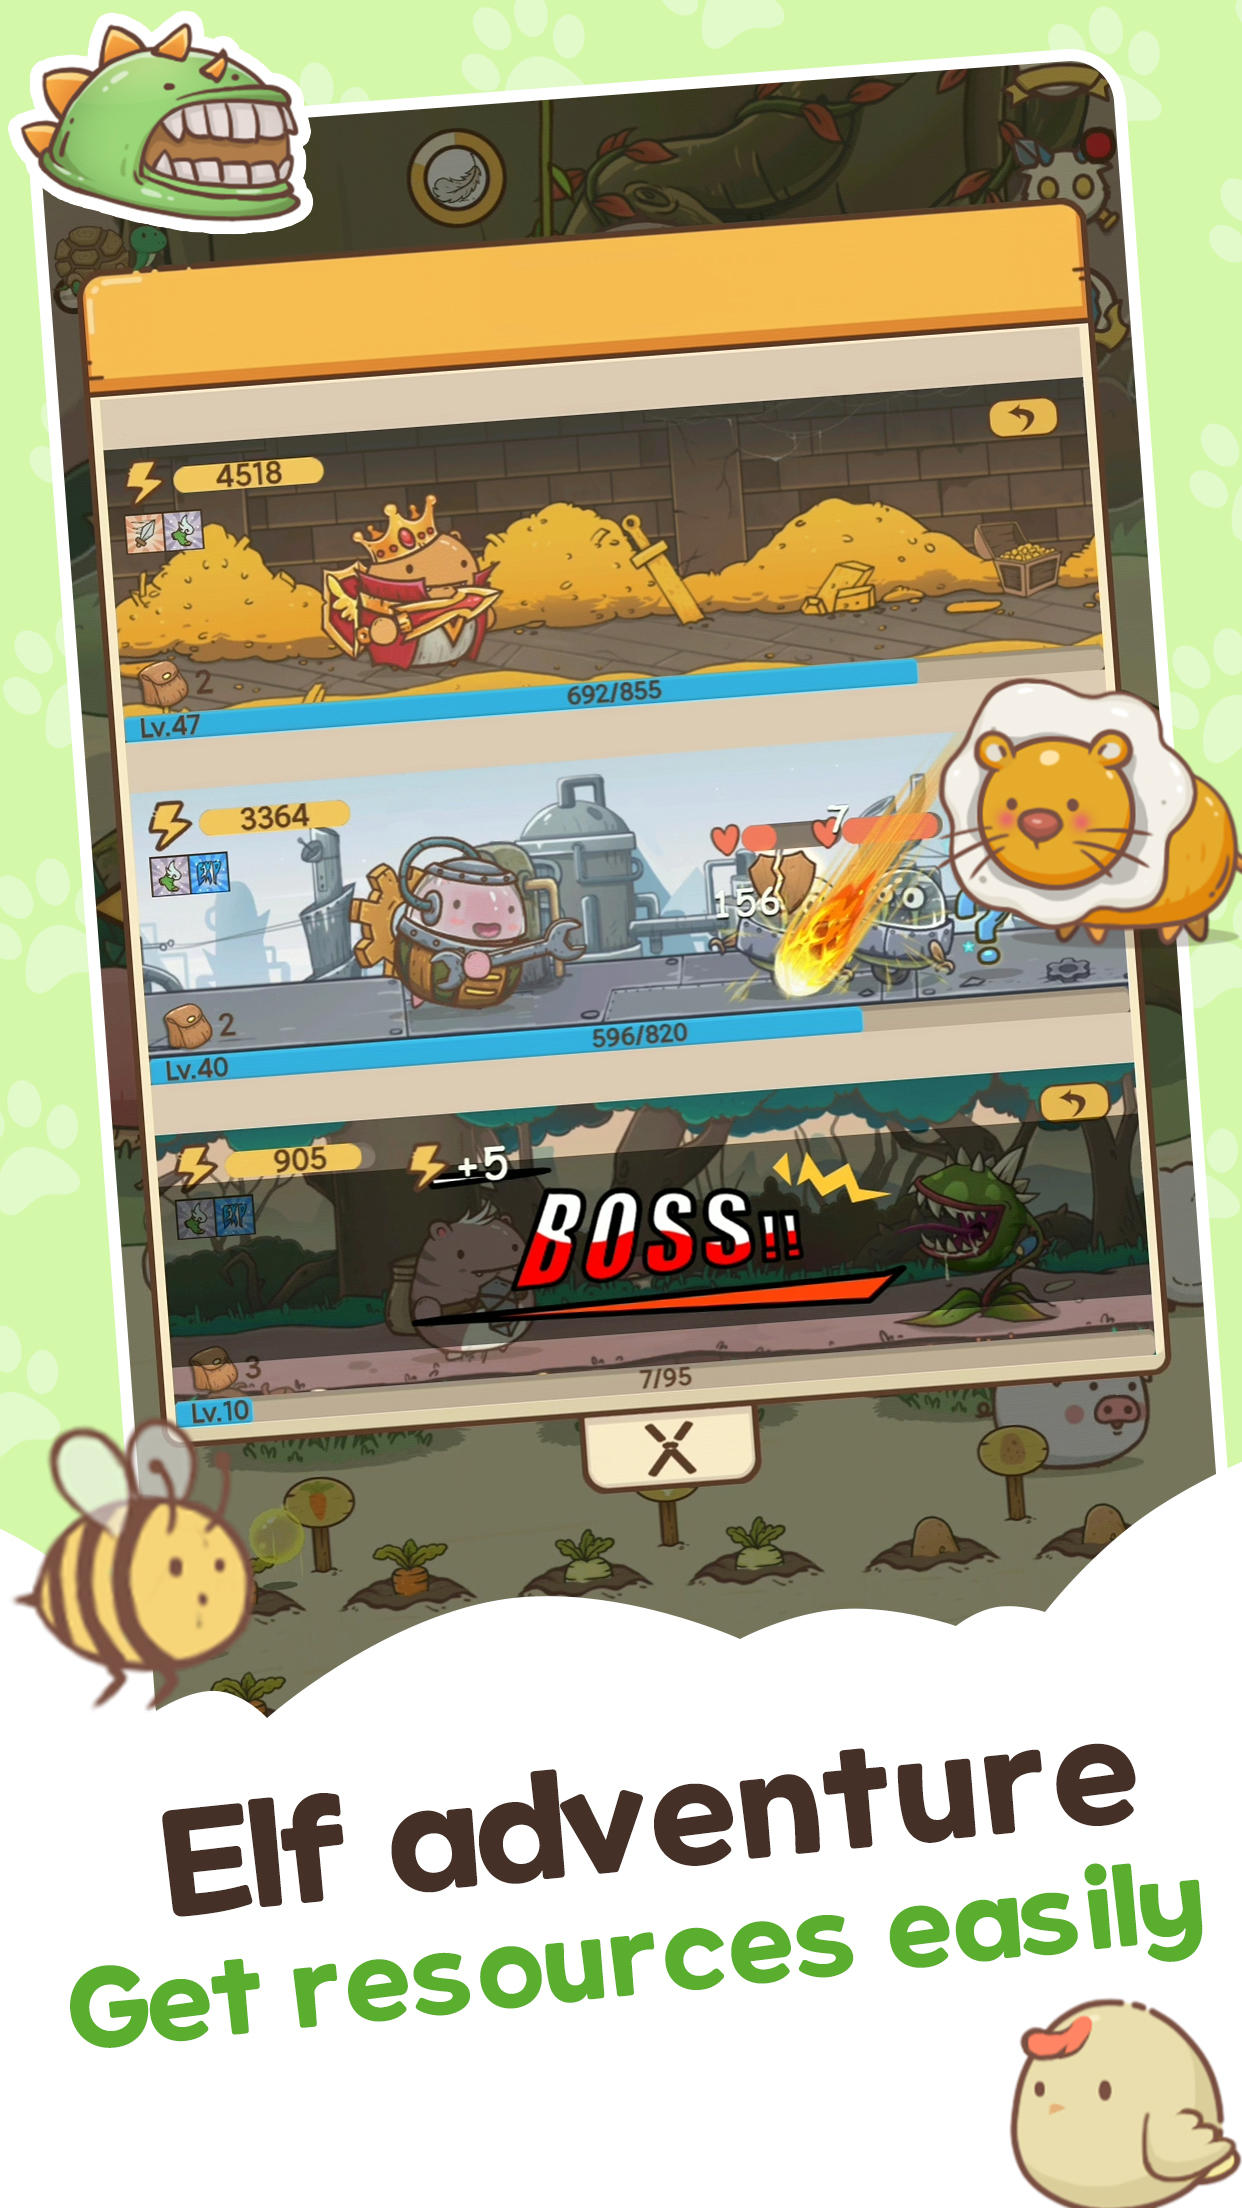 Screenshot of Ollie's Manor: Pet Farm Sim